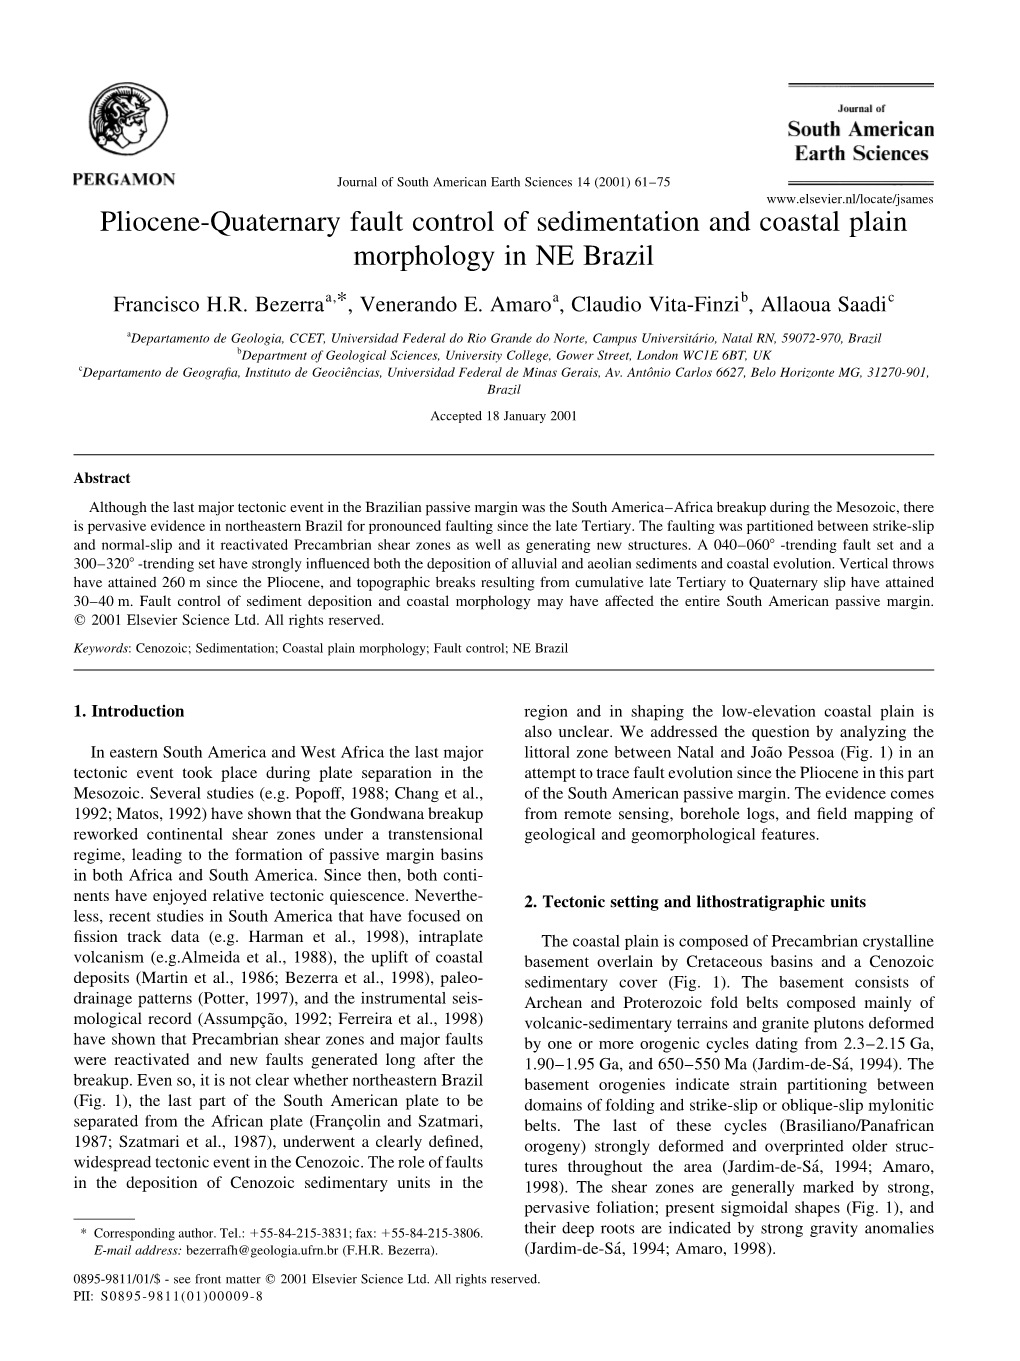 Pliocene-Quaternary Fault Control of Sedimentation and Coastal Plain Morphology in NE Brazil